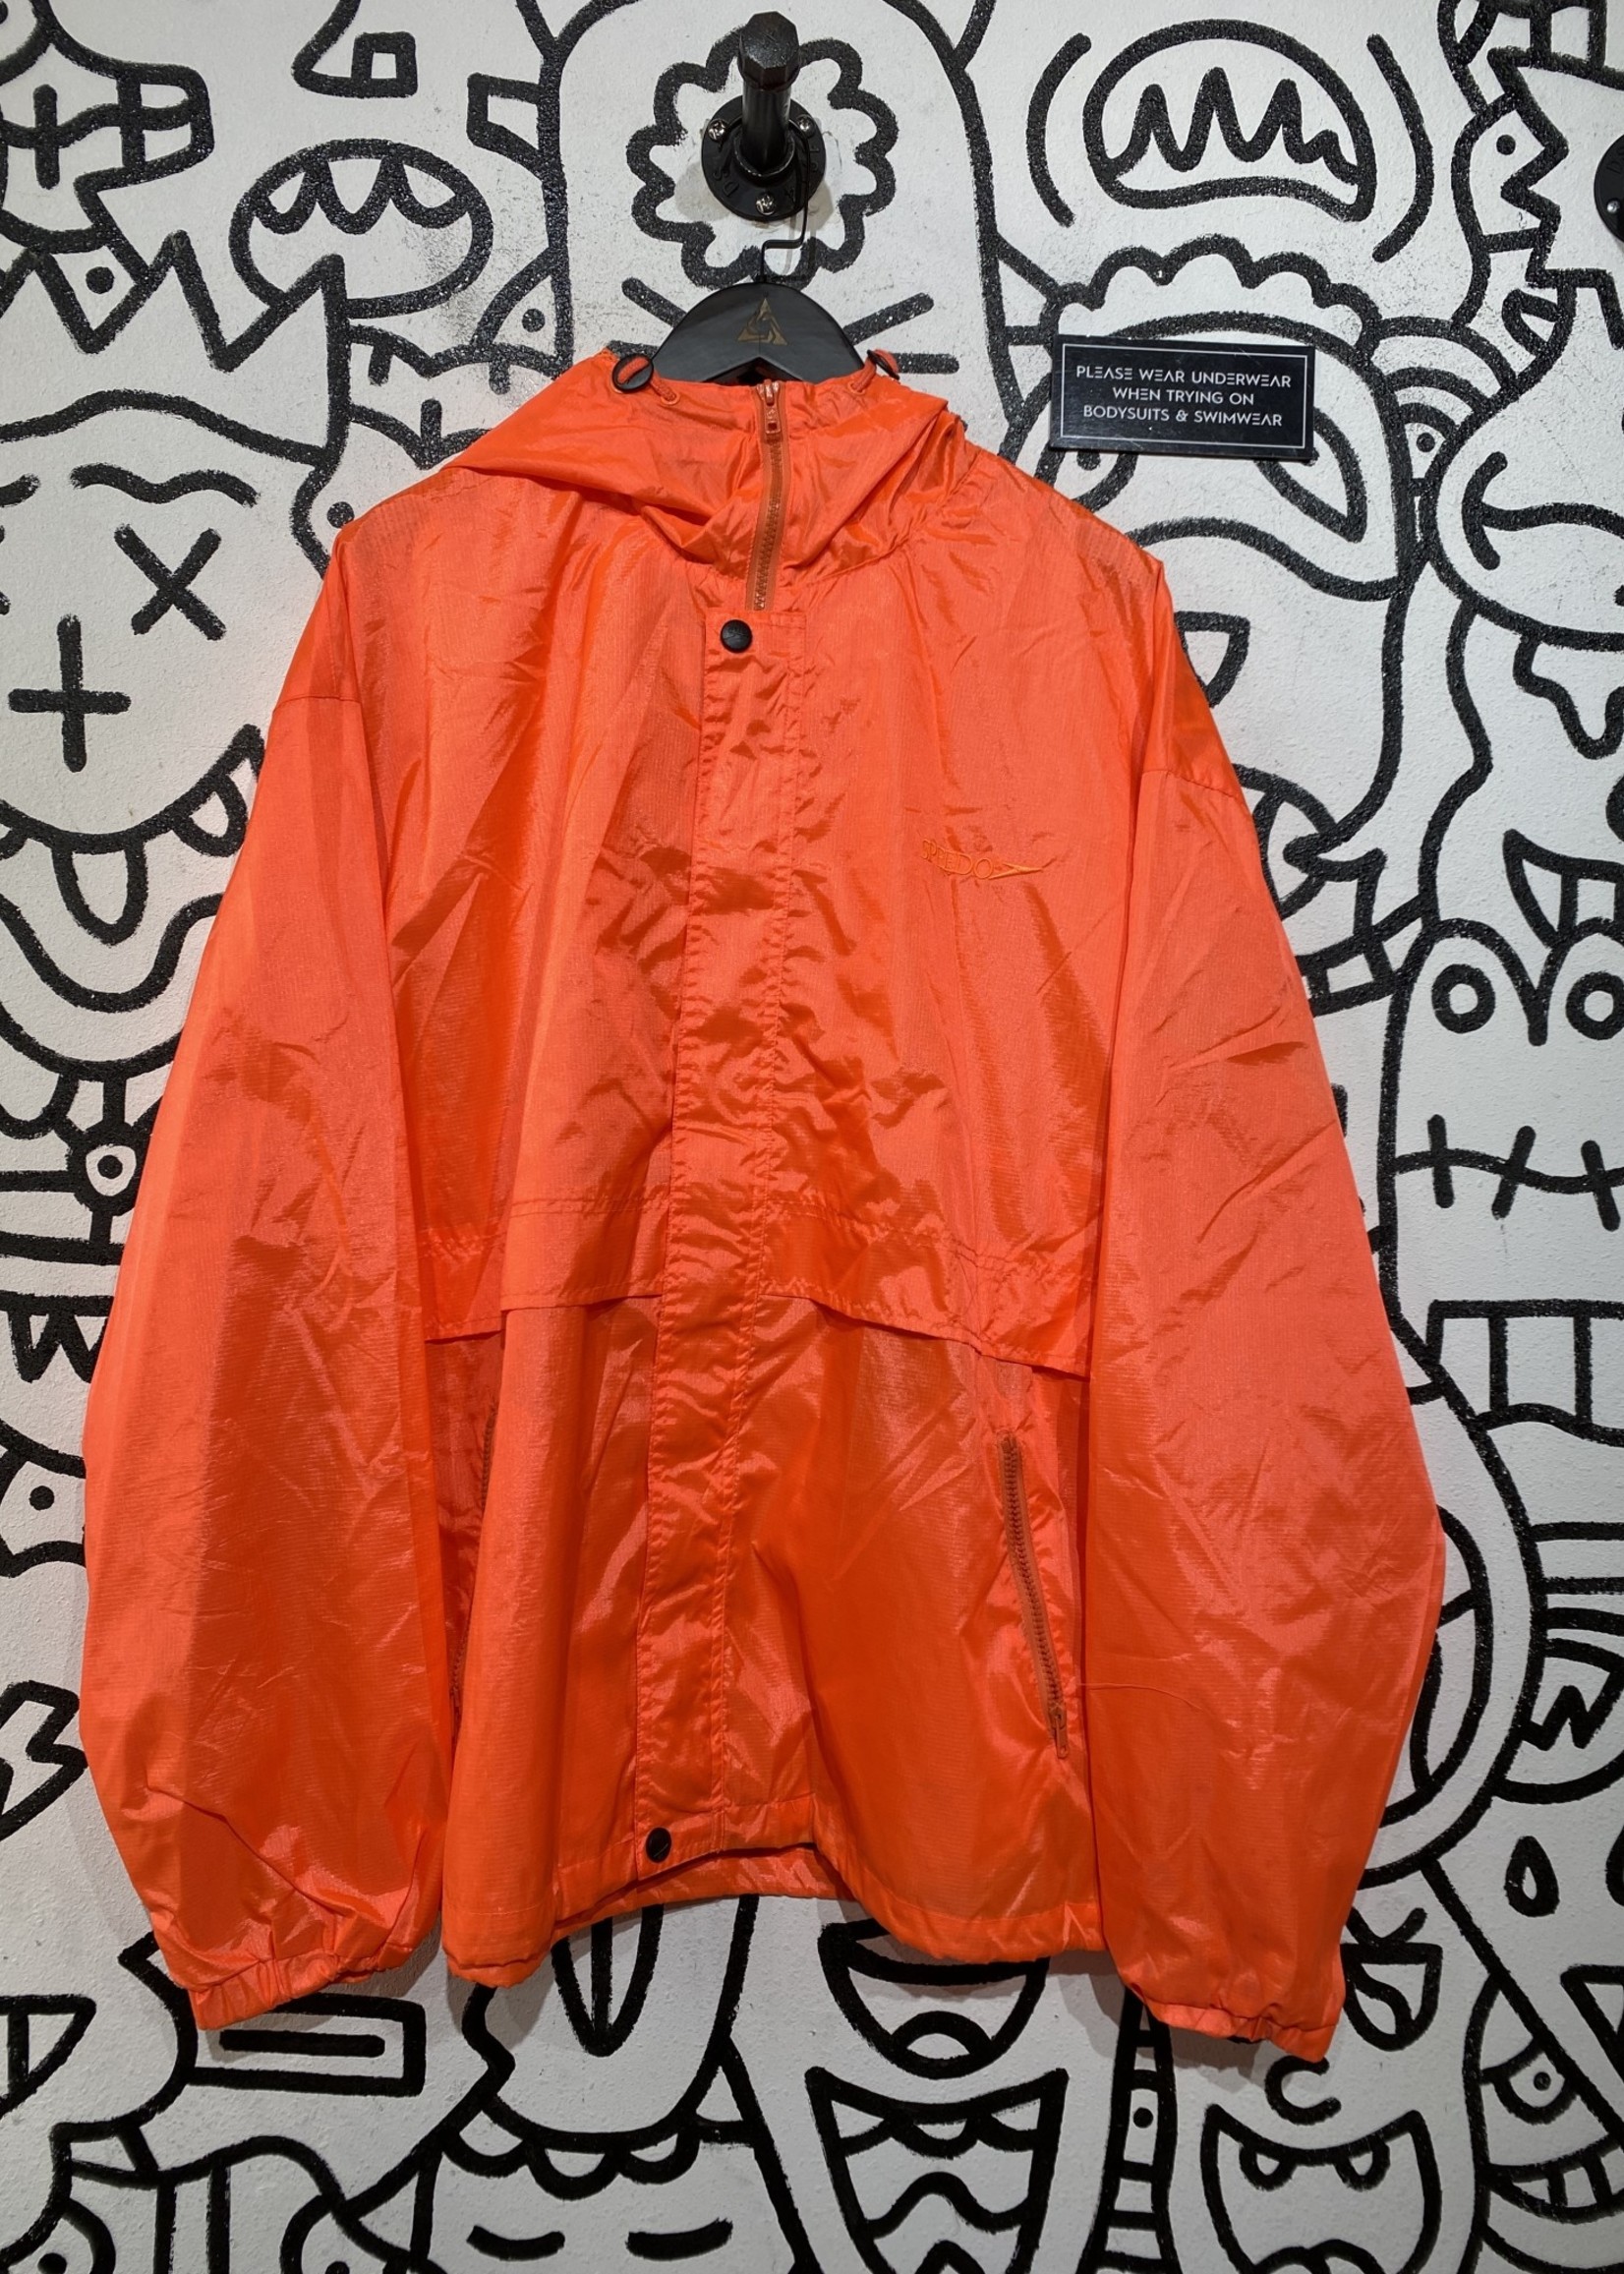 Speedo Neon Orange Packable Windbreaker (Bag Inside) XL